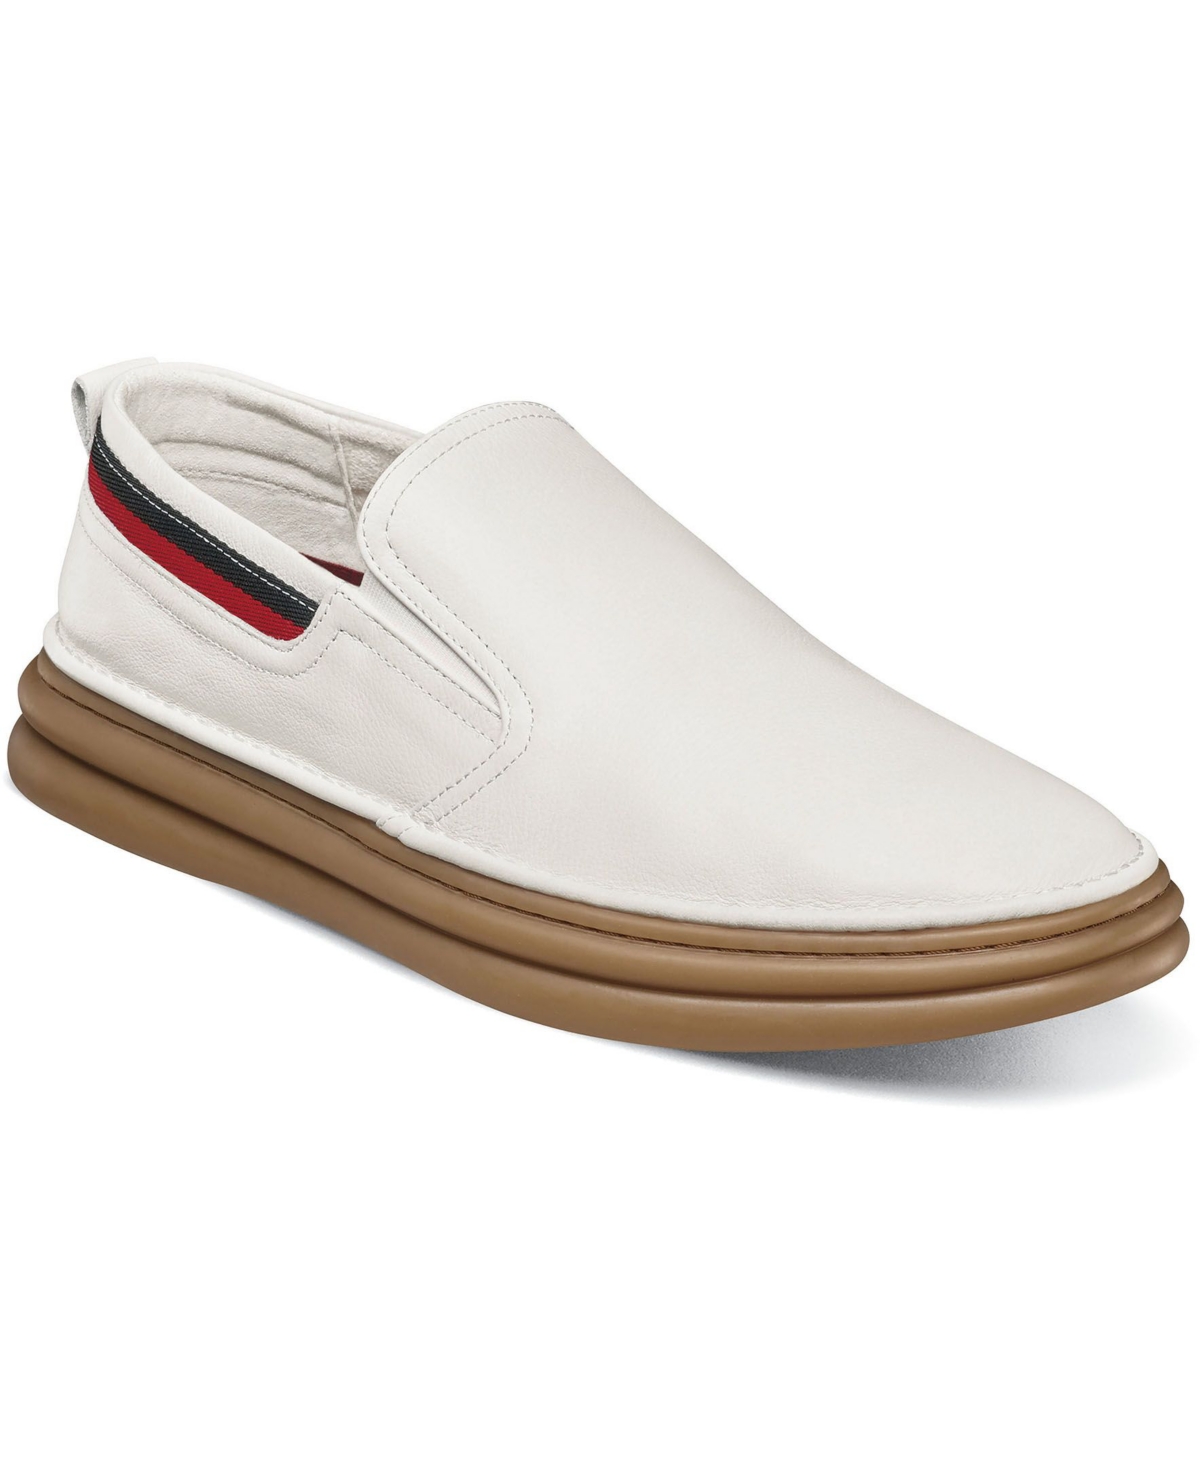 Men's Delmar Plain Toe Slip On Shoes - White